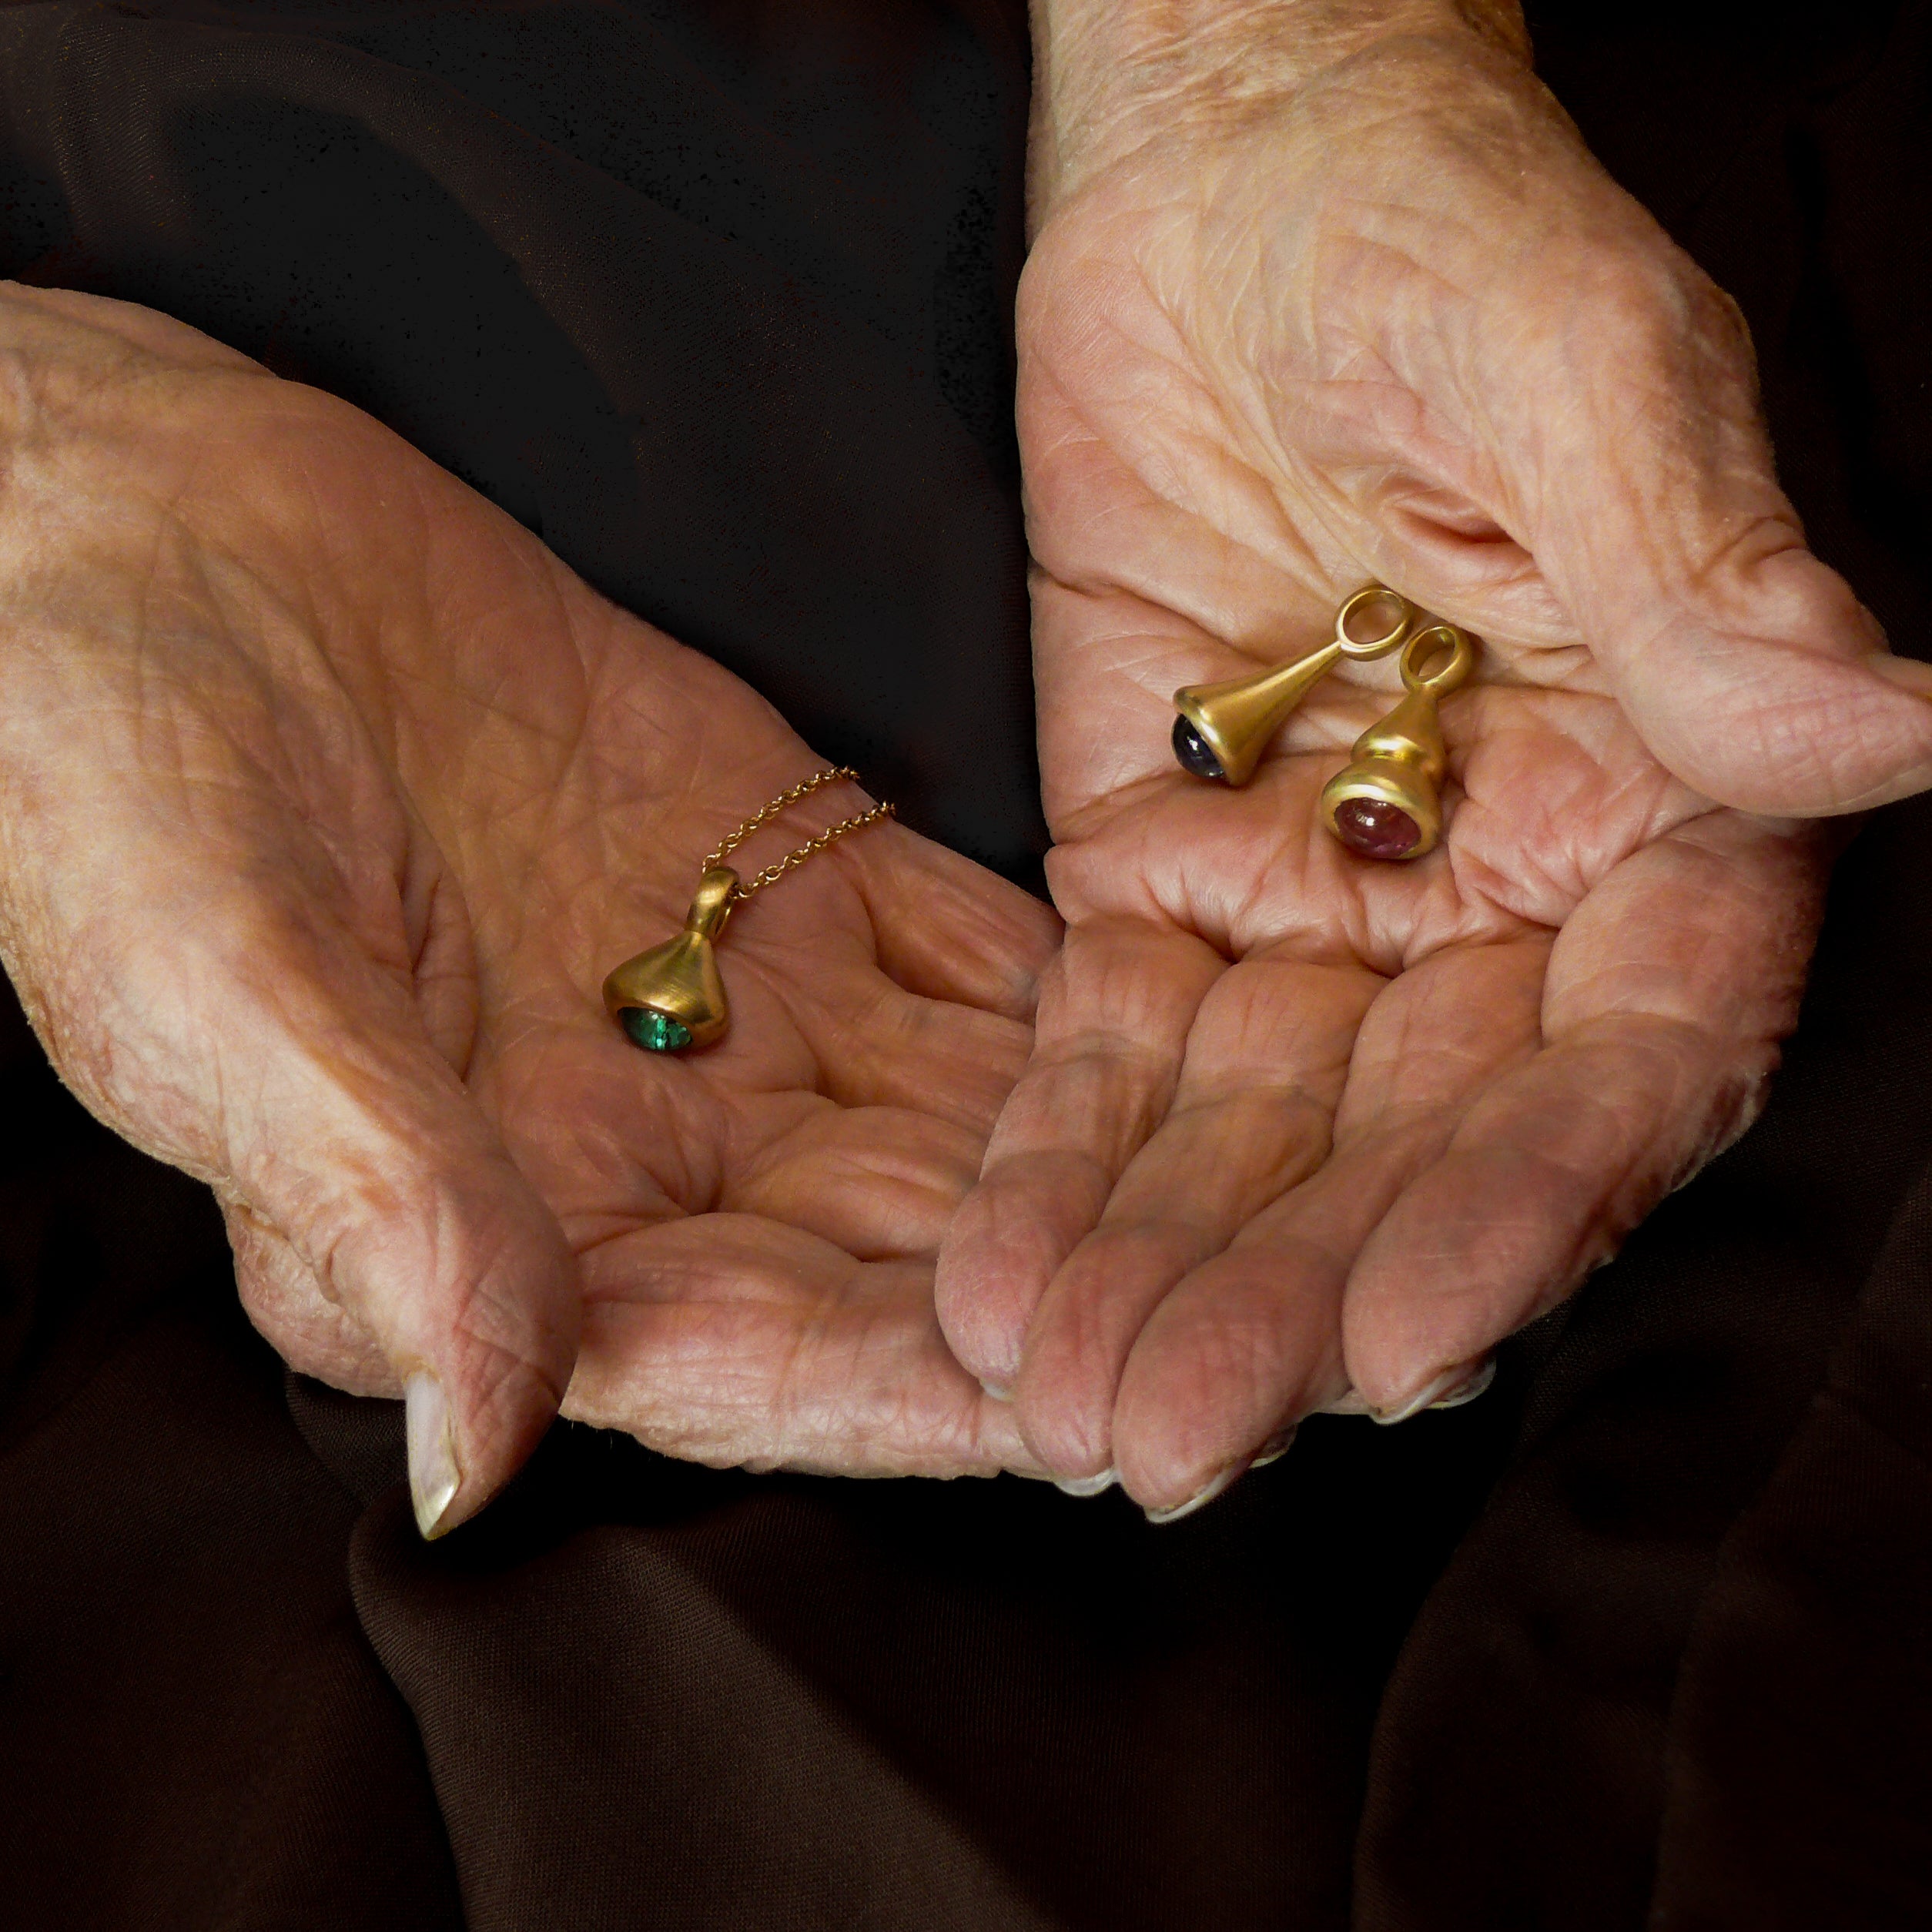 Pendulum Charms in Grandma's hands